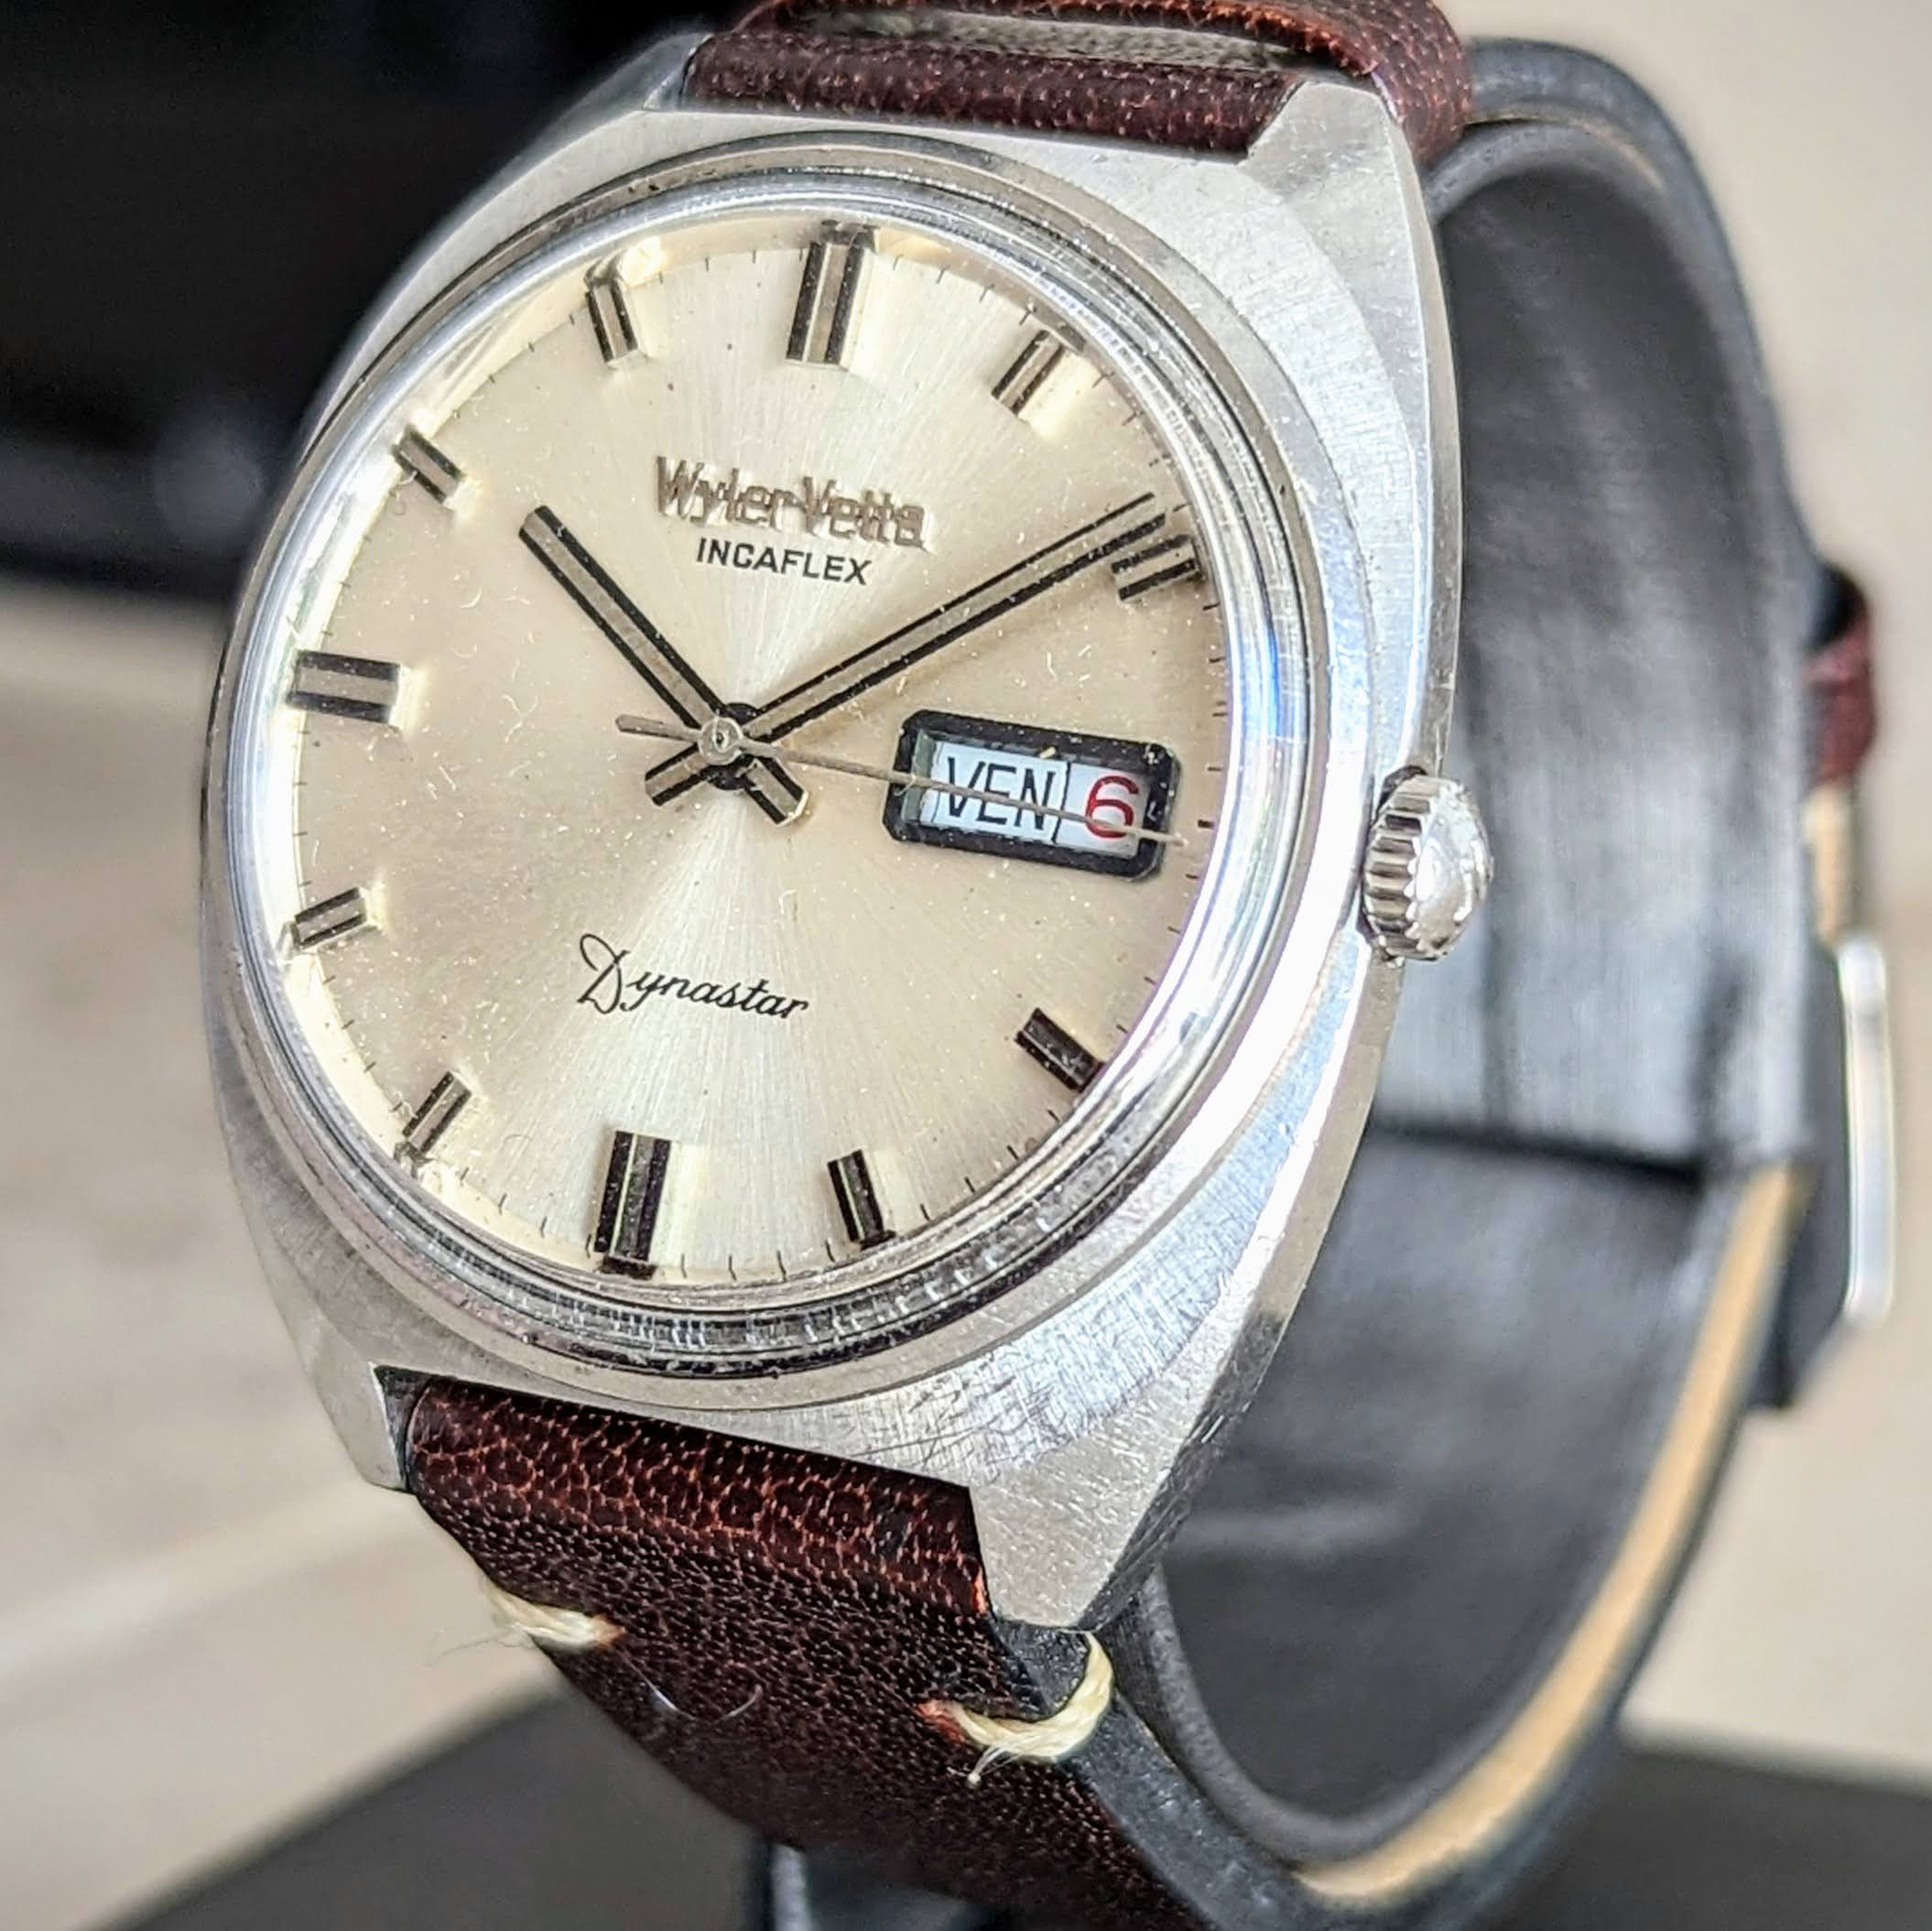 Wyler-Vetta Automatic Watch Incaflex Dynastar 1960's Wristwatch “The Compressor”